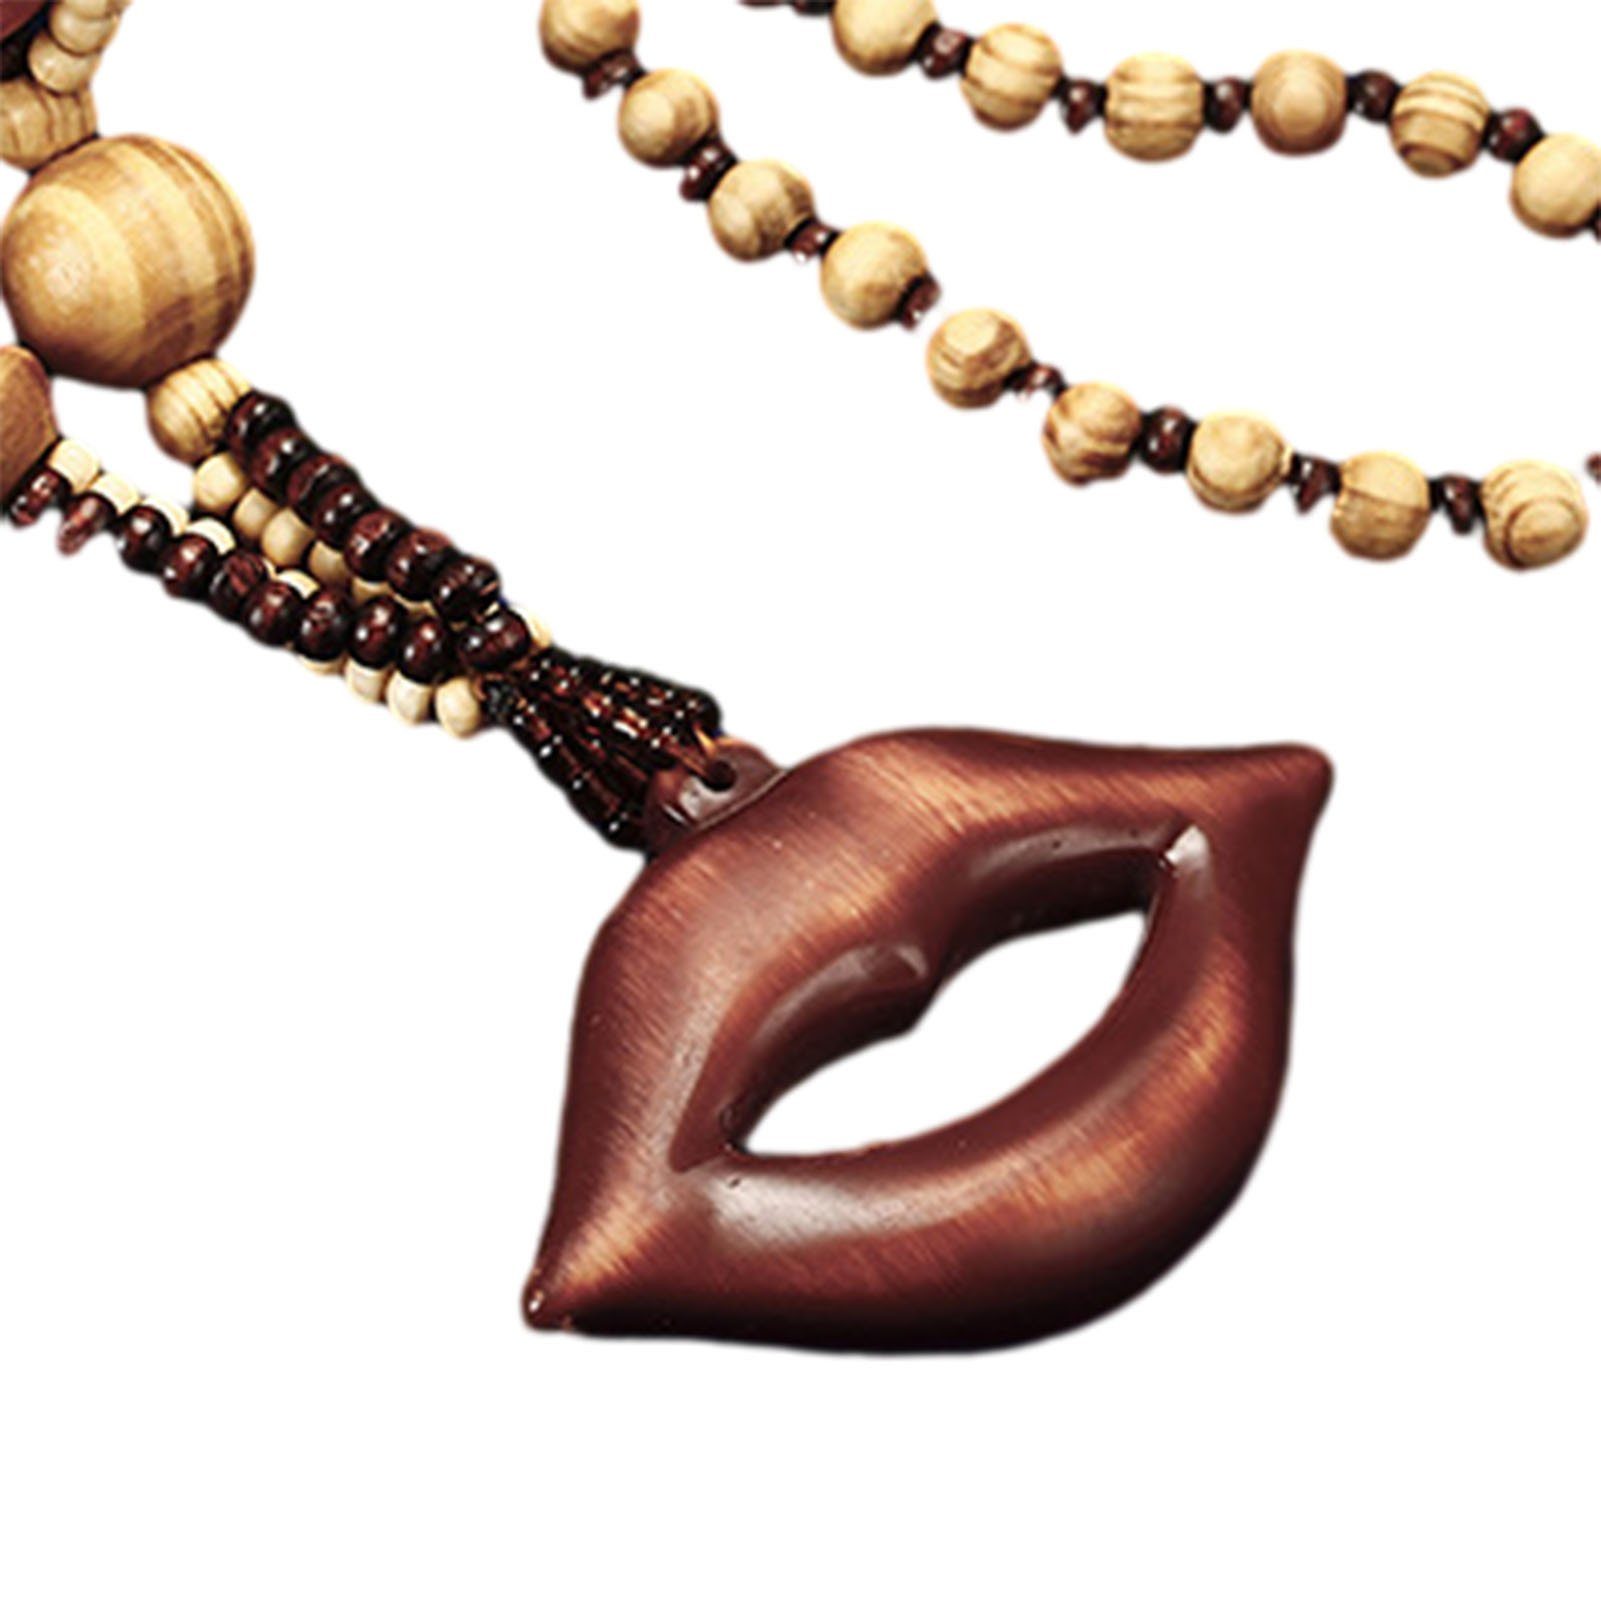 Perlenkette, Aminal Halsreif Accessoires Retro-Modische Zodiacs-Form-Halskette, Blusmart